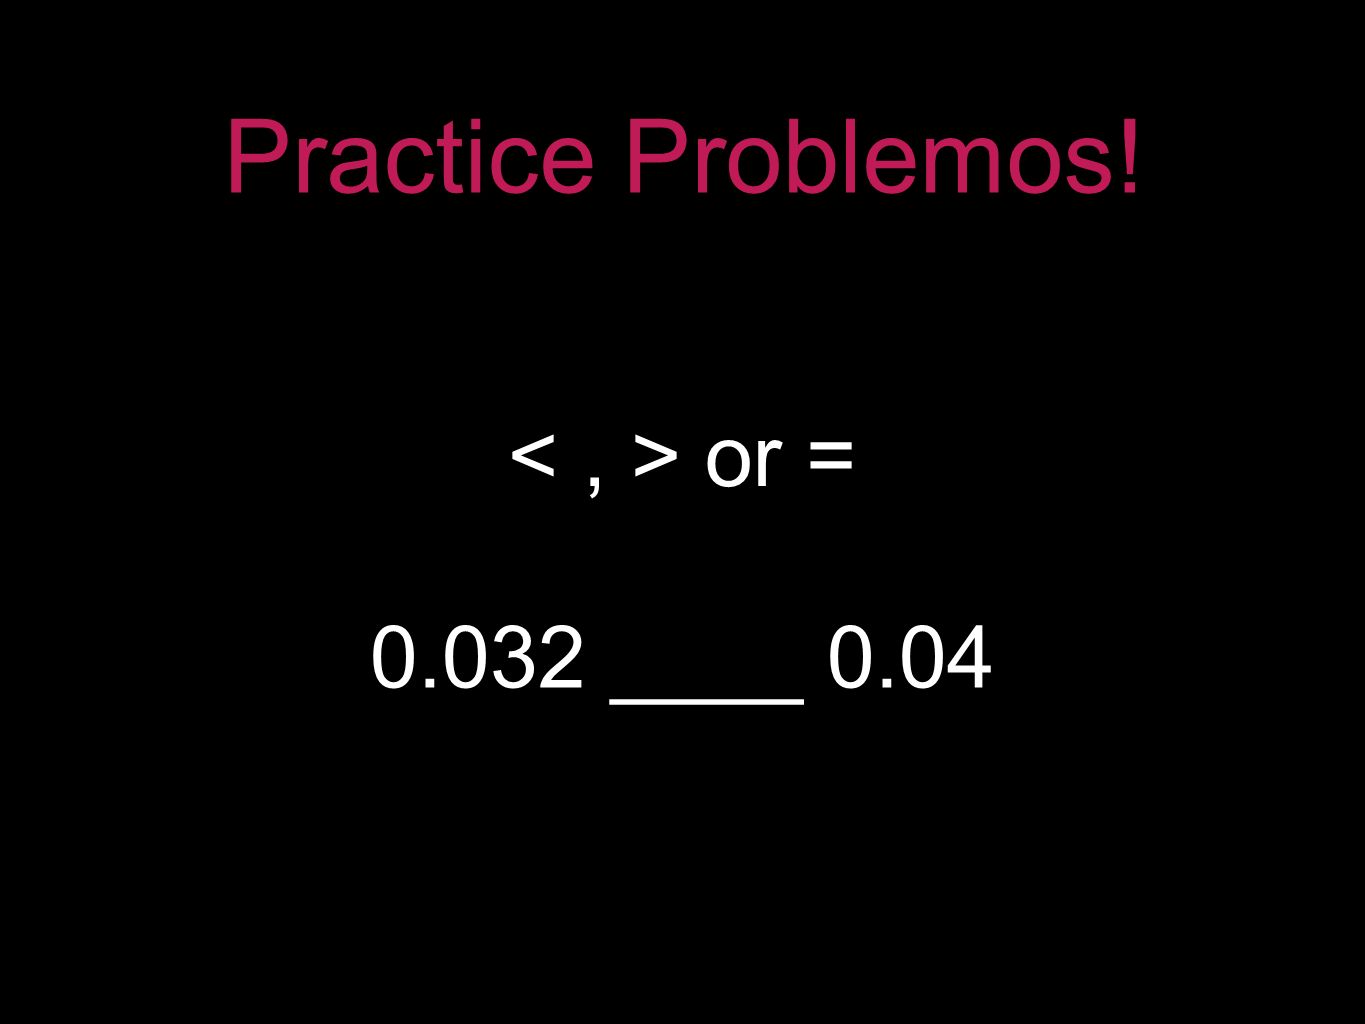 Practice Problemos! ____ 0.04 or =